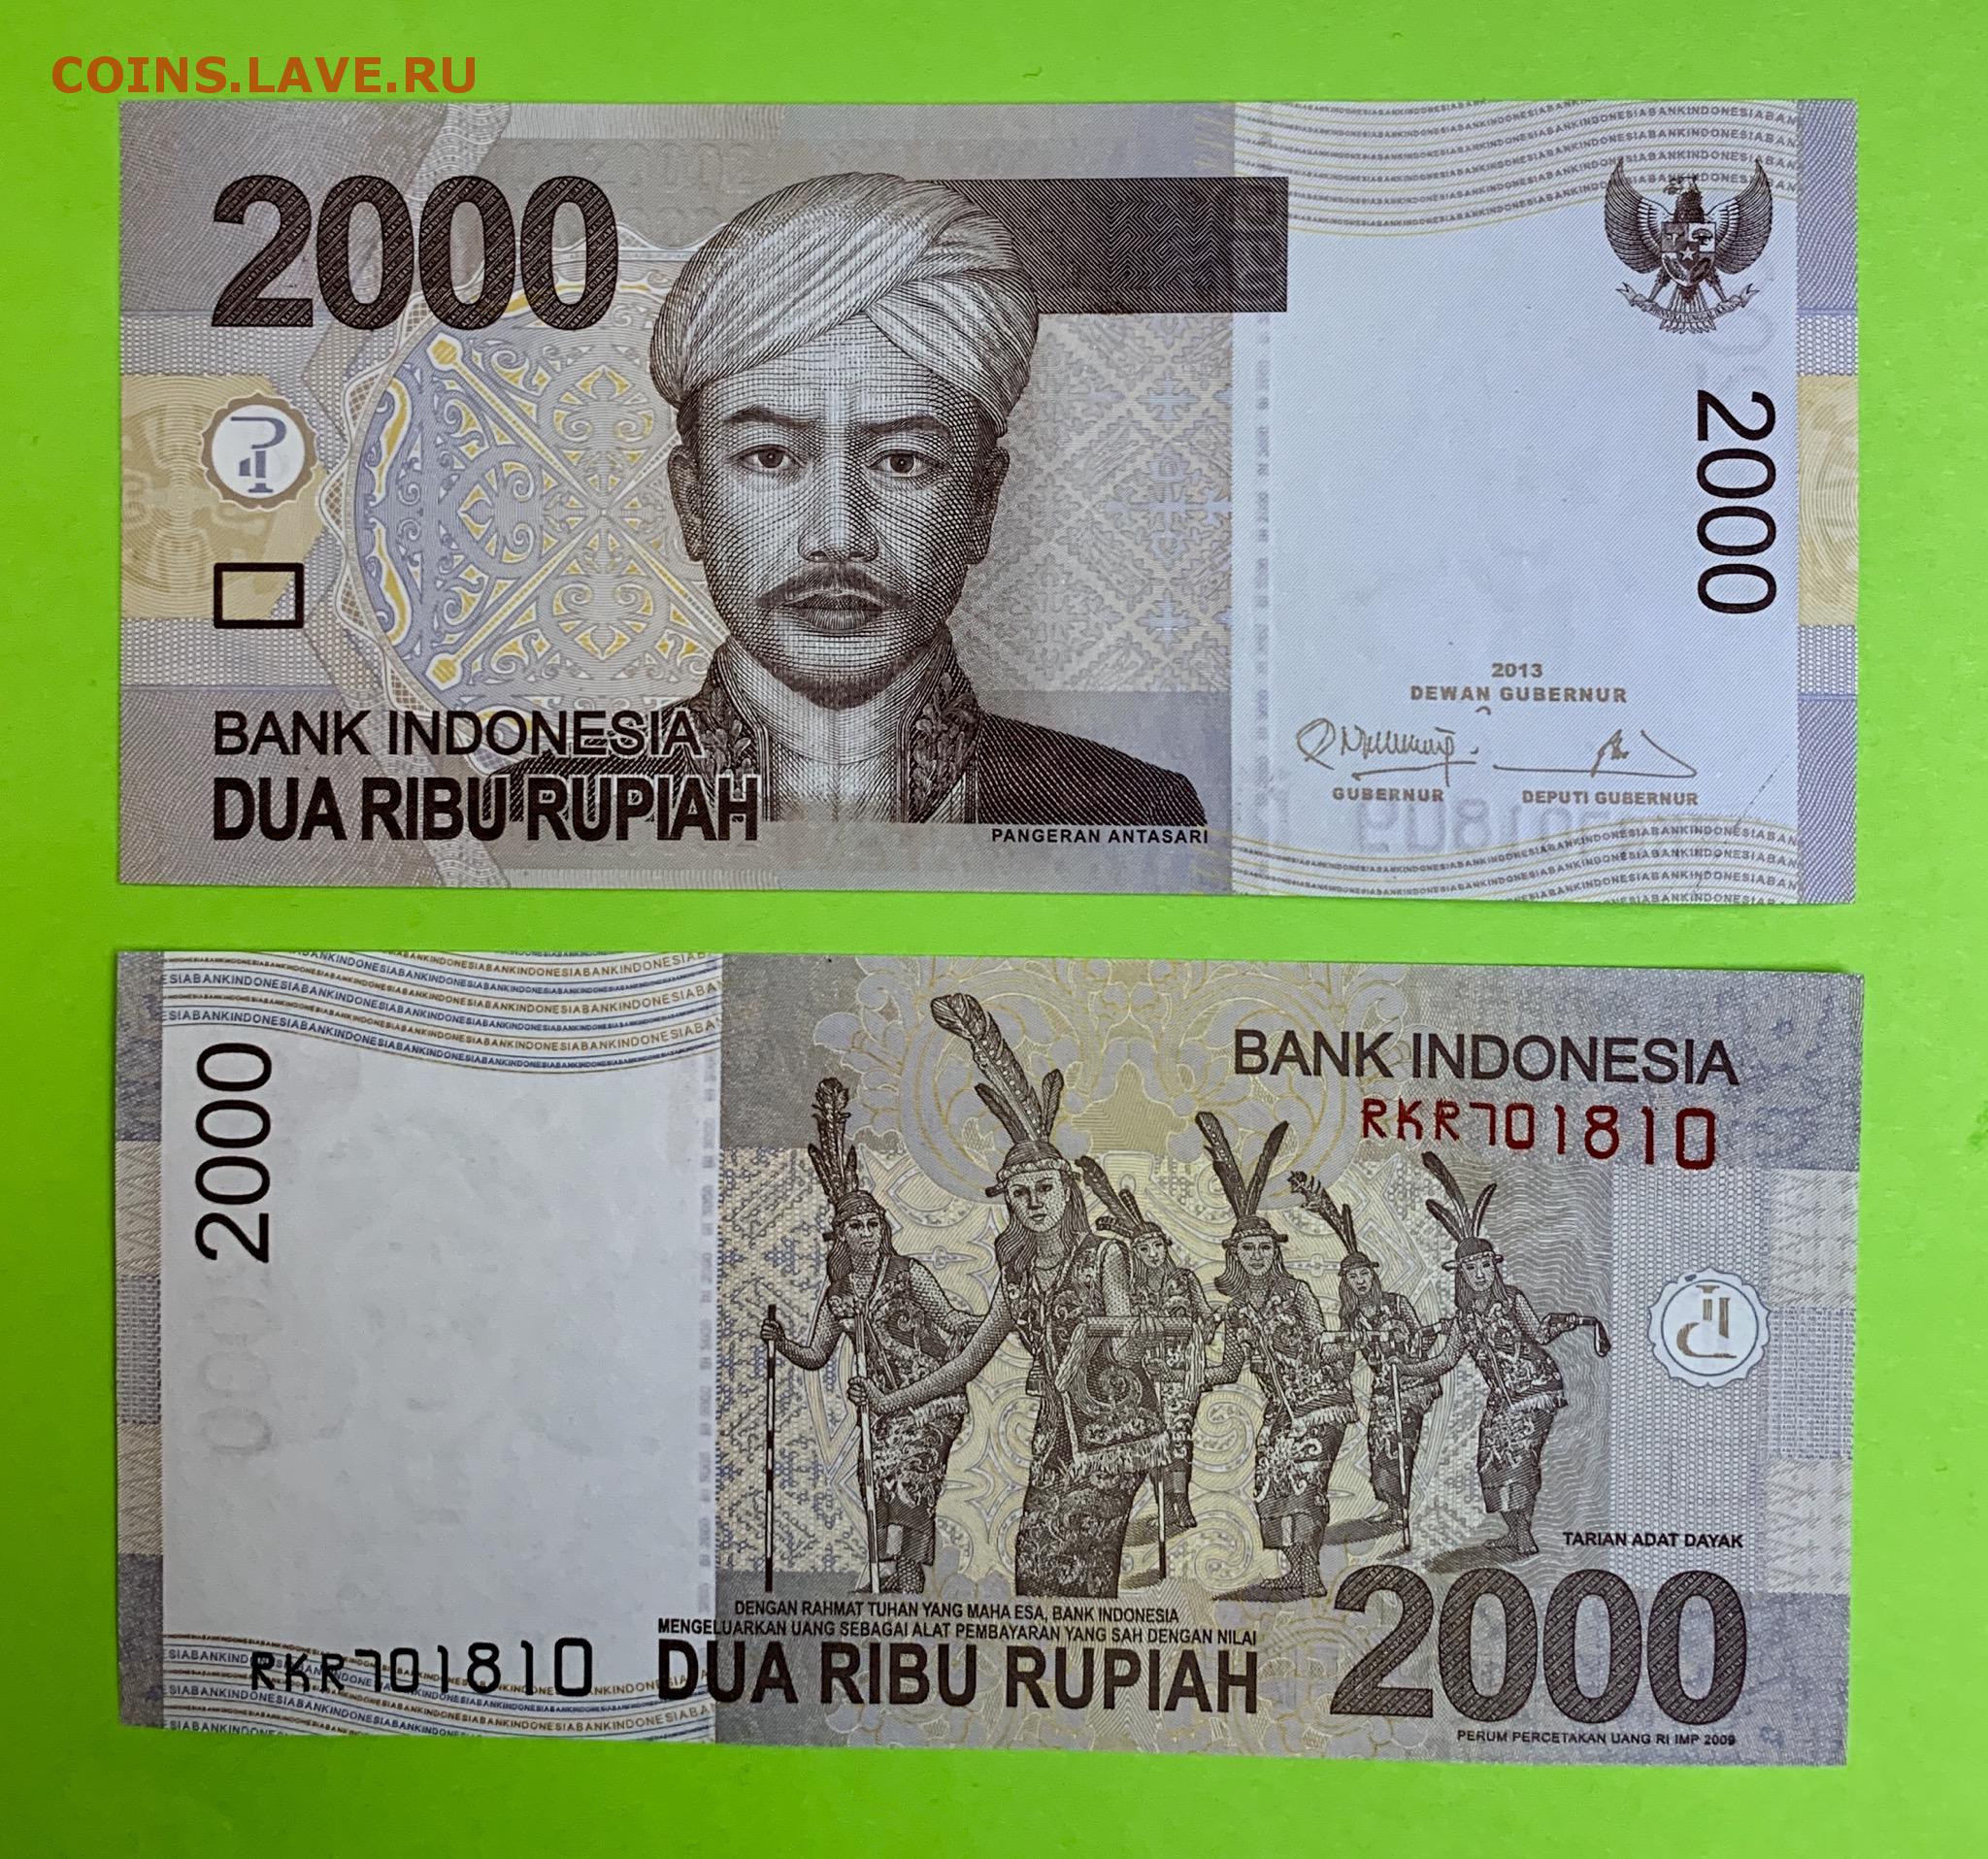 Idr в рублях. 2000 Рупий. 2000 Рупий в рублях. 2000 Индонезийских рупий в рублях. Bank Indonesia Dua ribu Rupiah 2000.